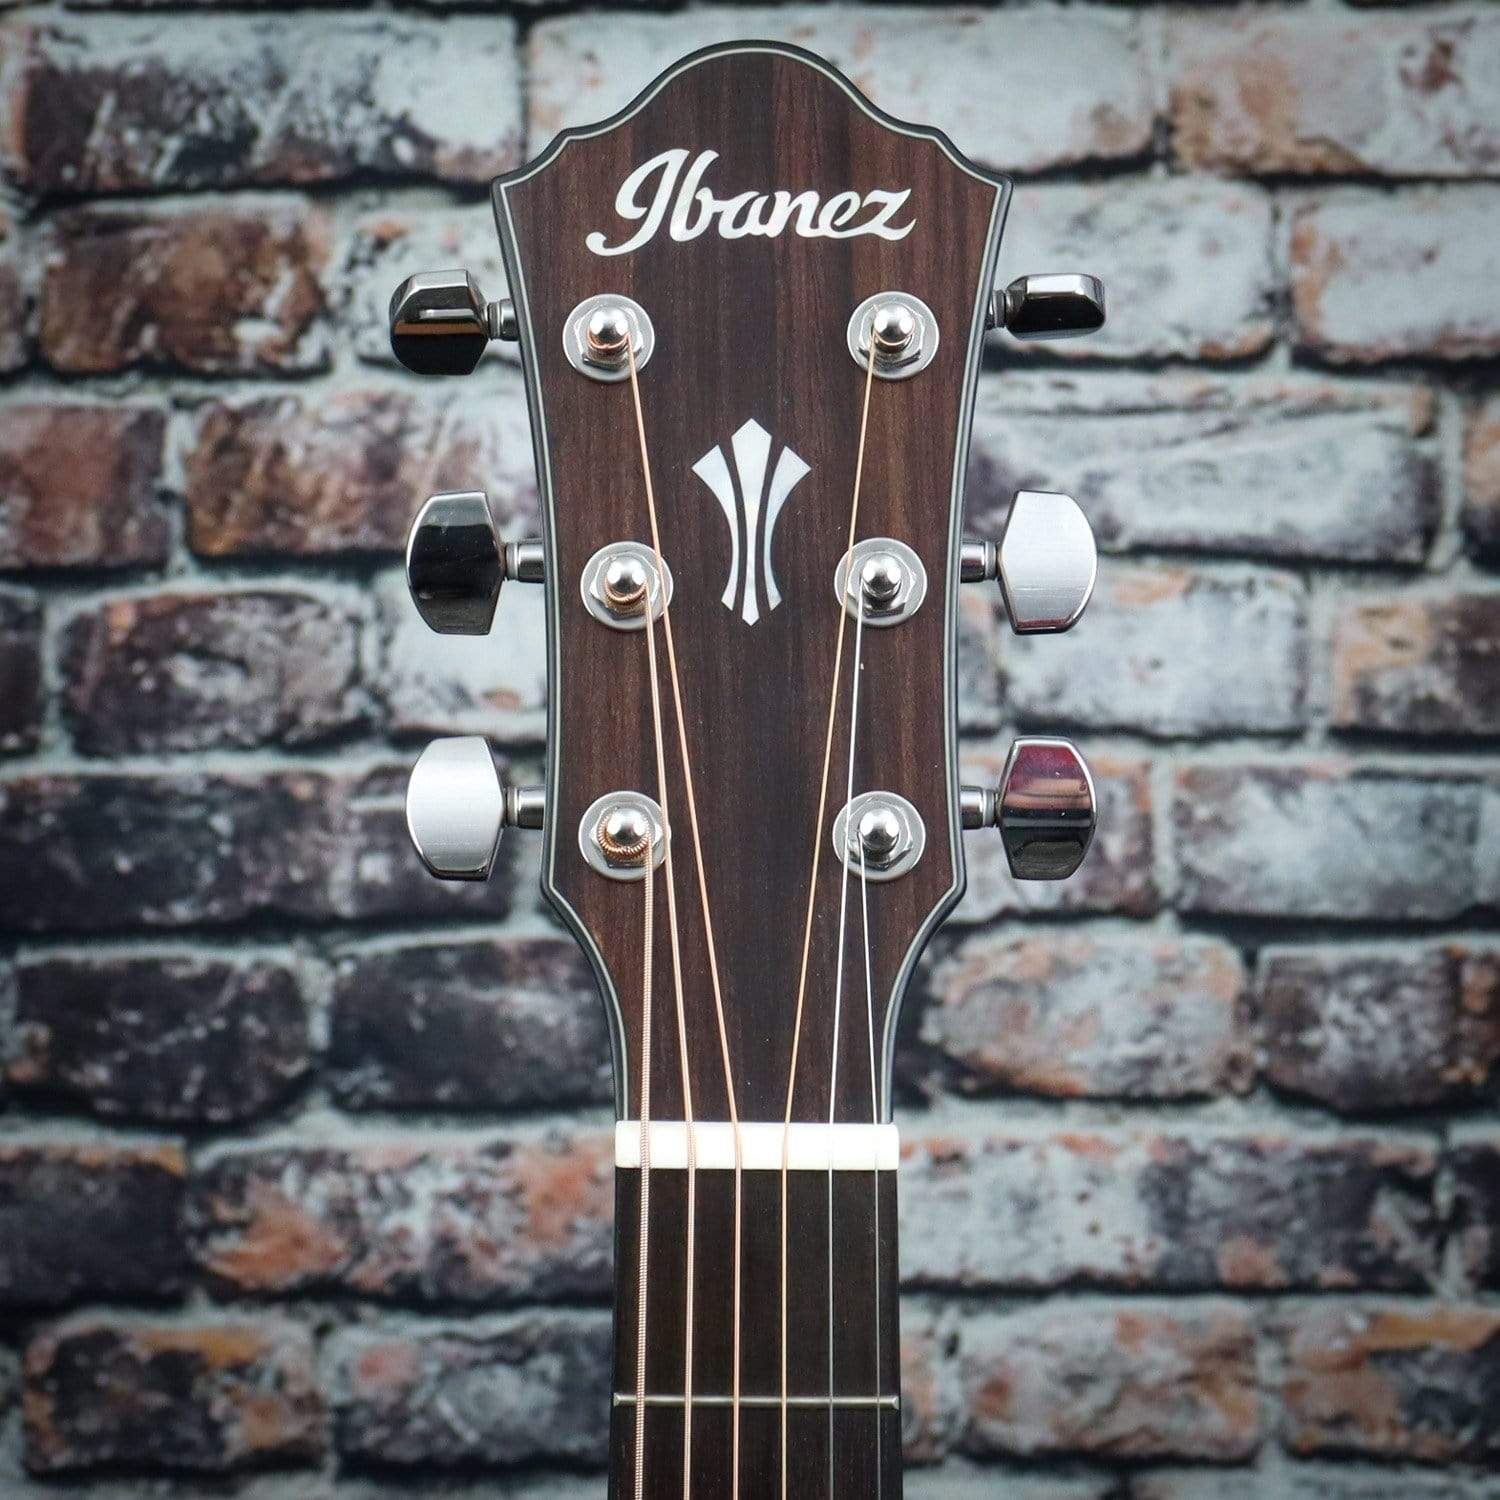 Ibanez AEG220 Acoustic Electric Guitar